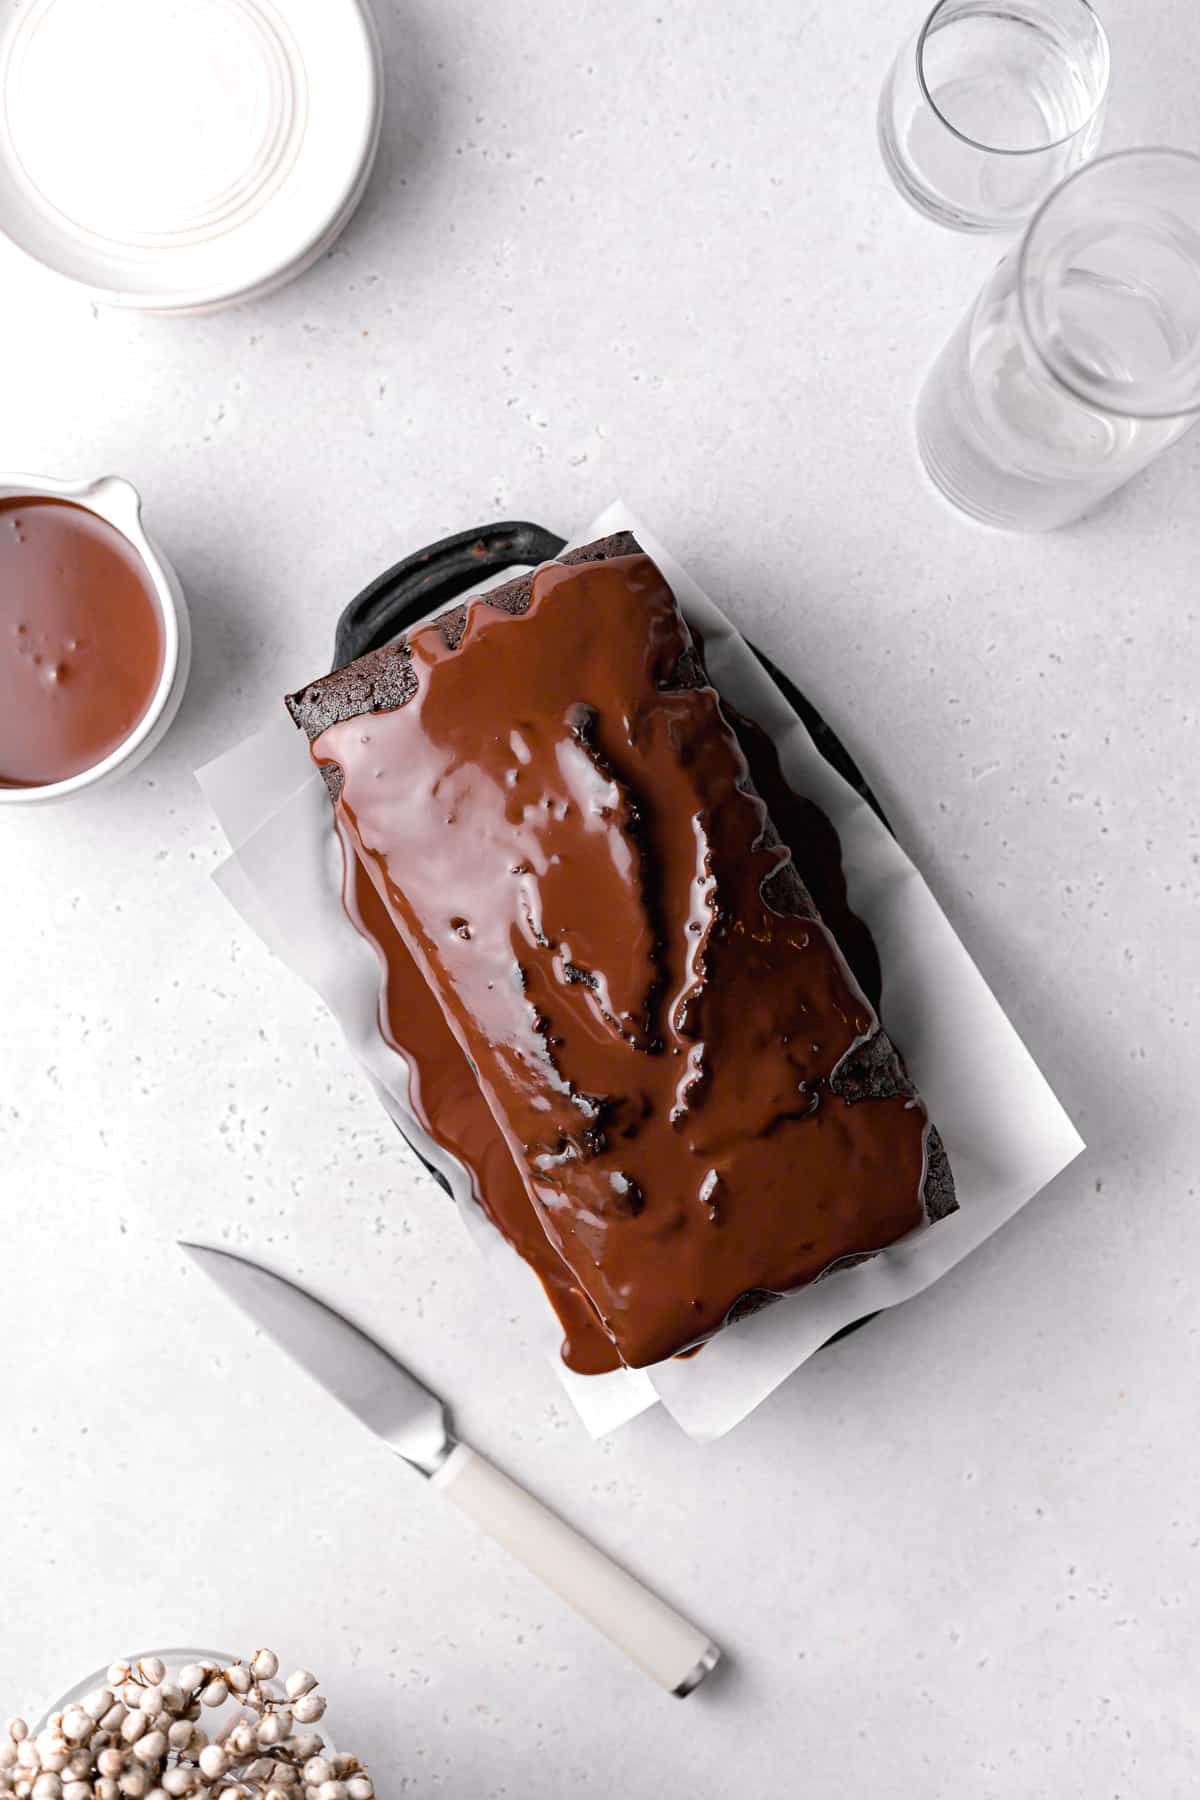 chocolate pound cake topped with a chocolate glaze.